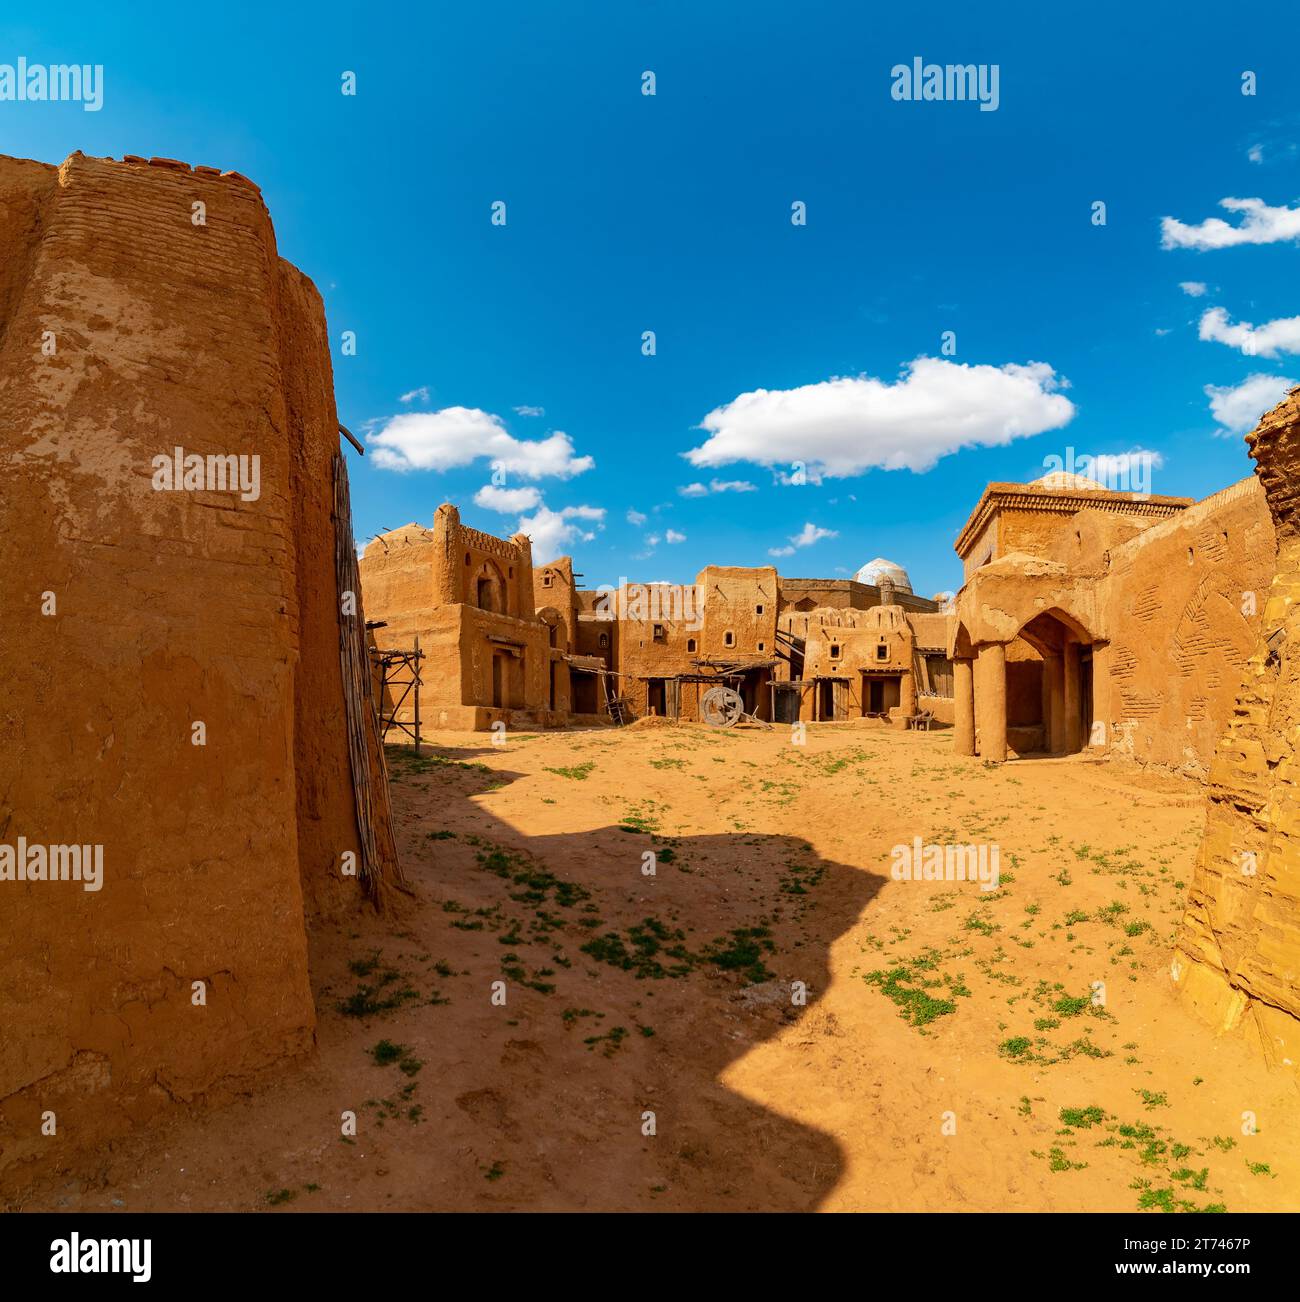 Fatiscente città medievale orientale in un'area desertica Foto Stock